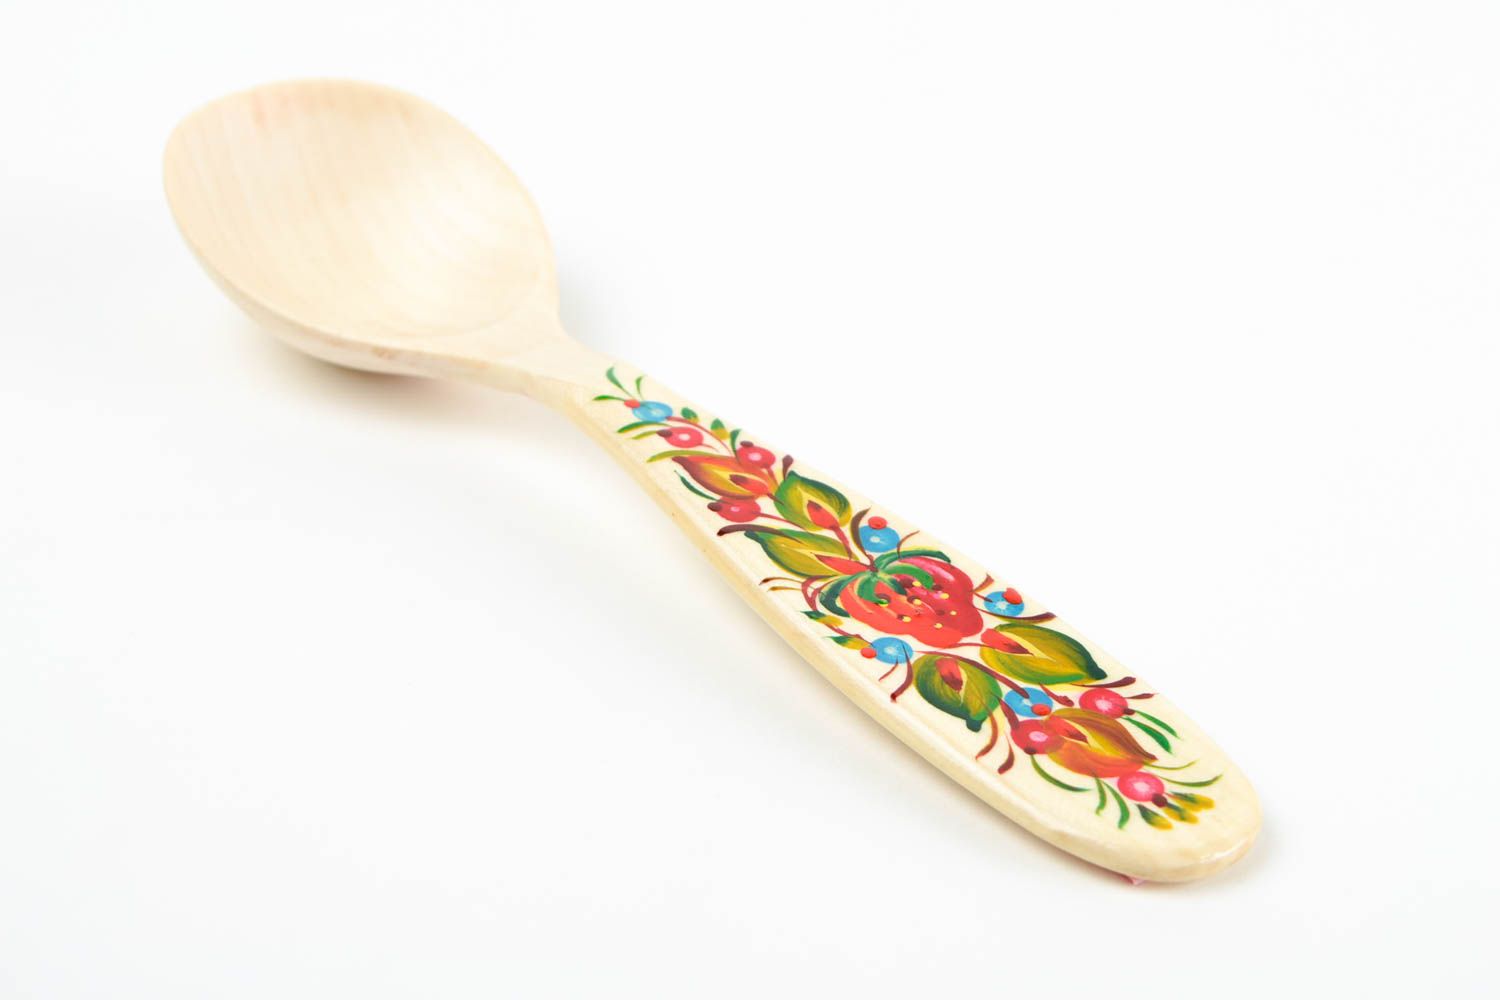 Handmade spoon unusual spoon for kitchen decor decor ideas unusual gift photo 4